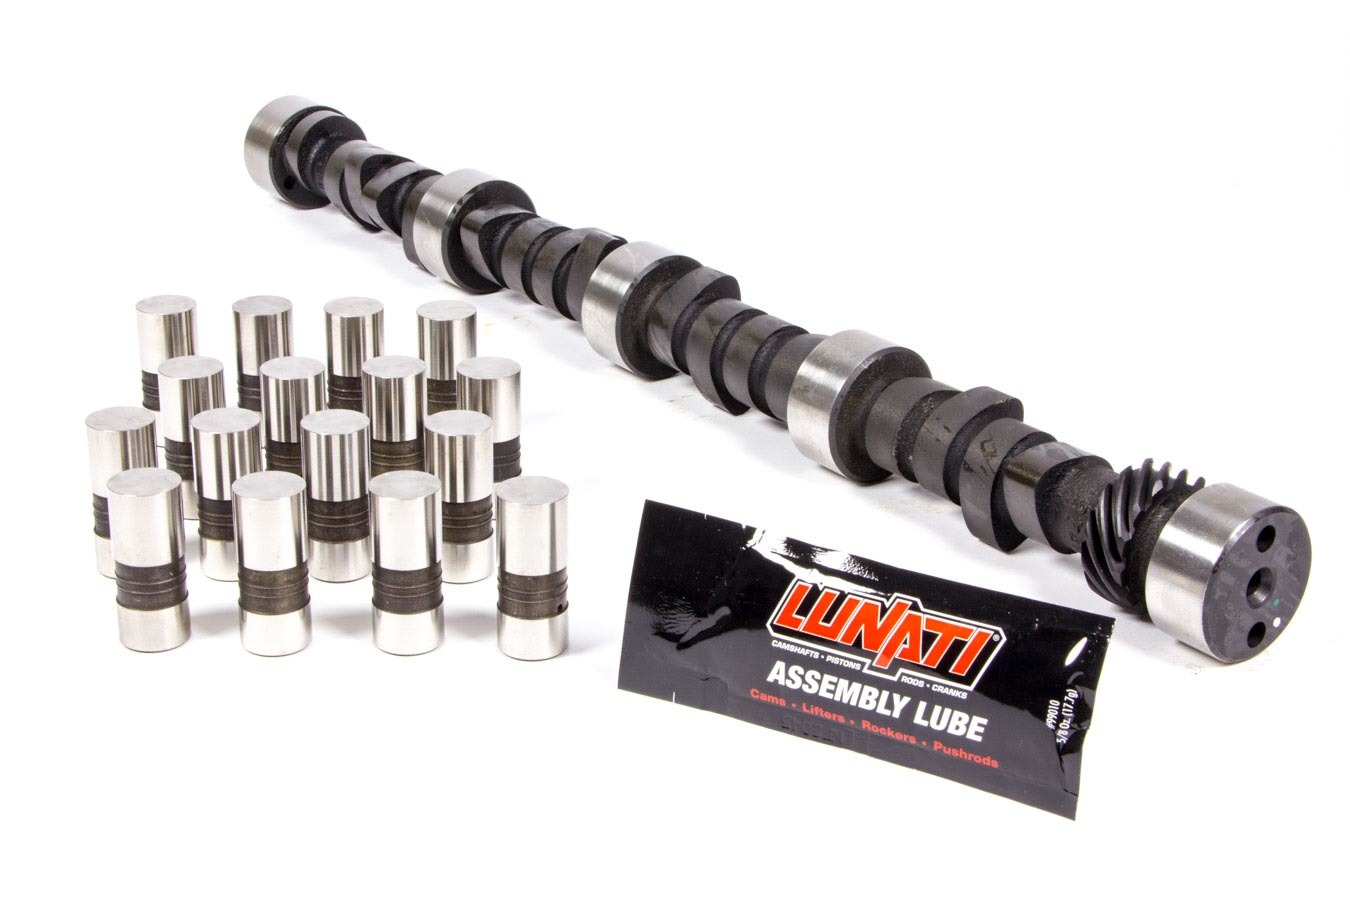 Lunati Cams 10110702LK Camshaft / Lifters, Voodoo, Hydraulic Flat Tappet, Lift 0.530 / 0.542 in, Duration 262 / 268, 112 LSA, 1400 / 5800 RPM, Big Block Chevy, Kit